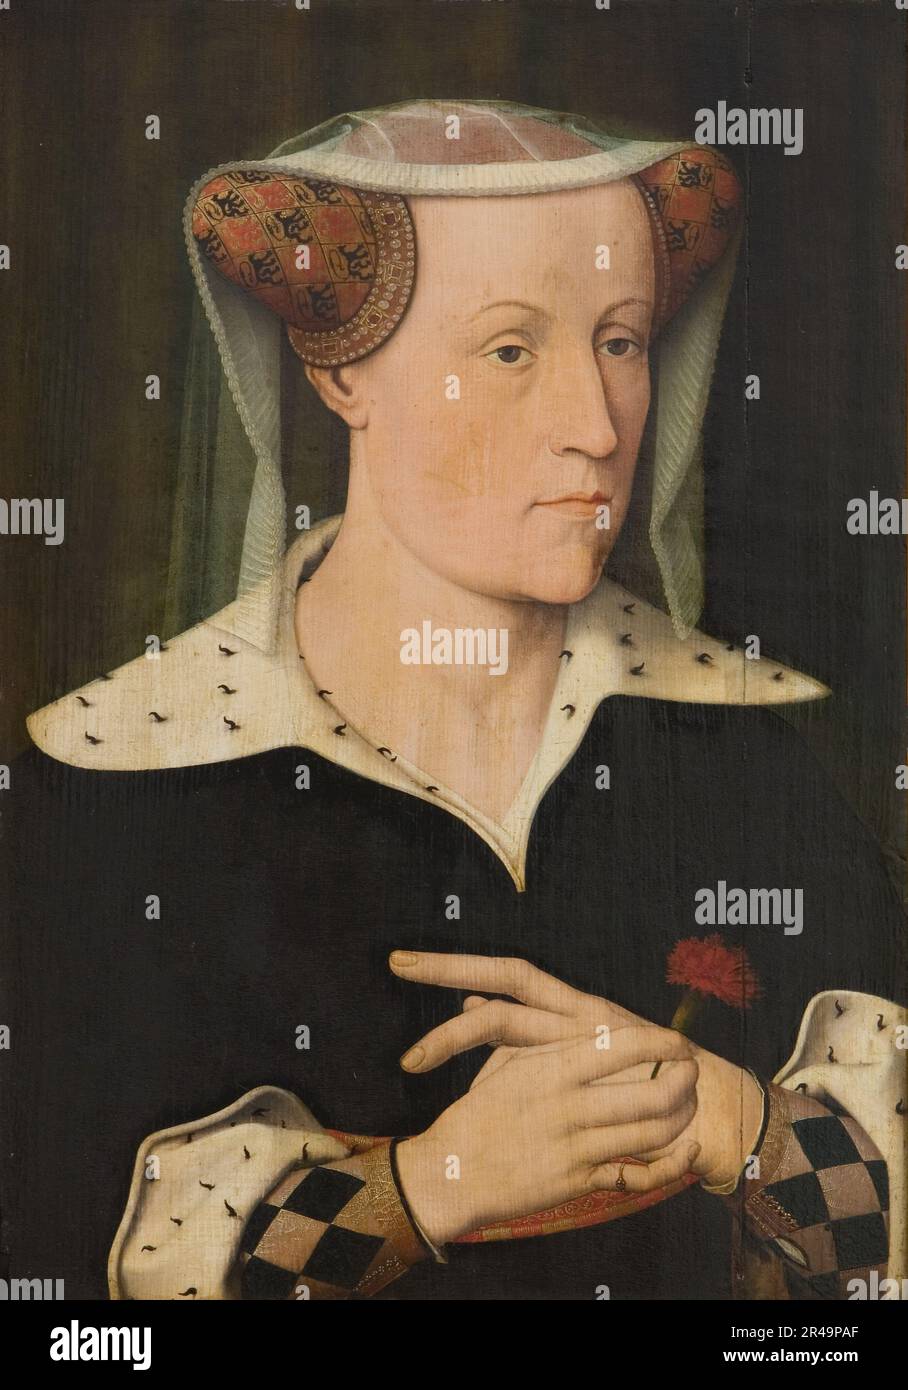 Jacoba of Bavaria, Countess of Holland and Zeeland, 1490-1556. Stock Photo